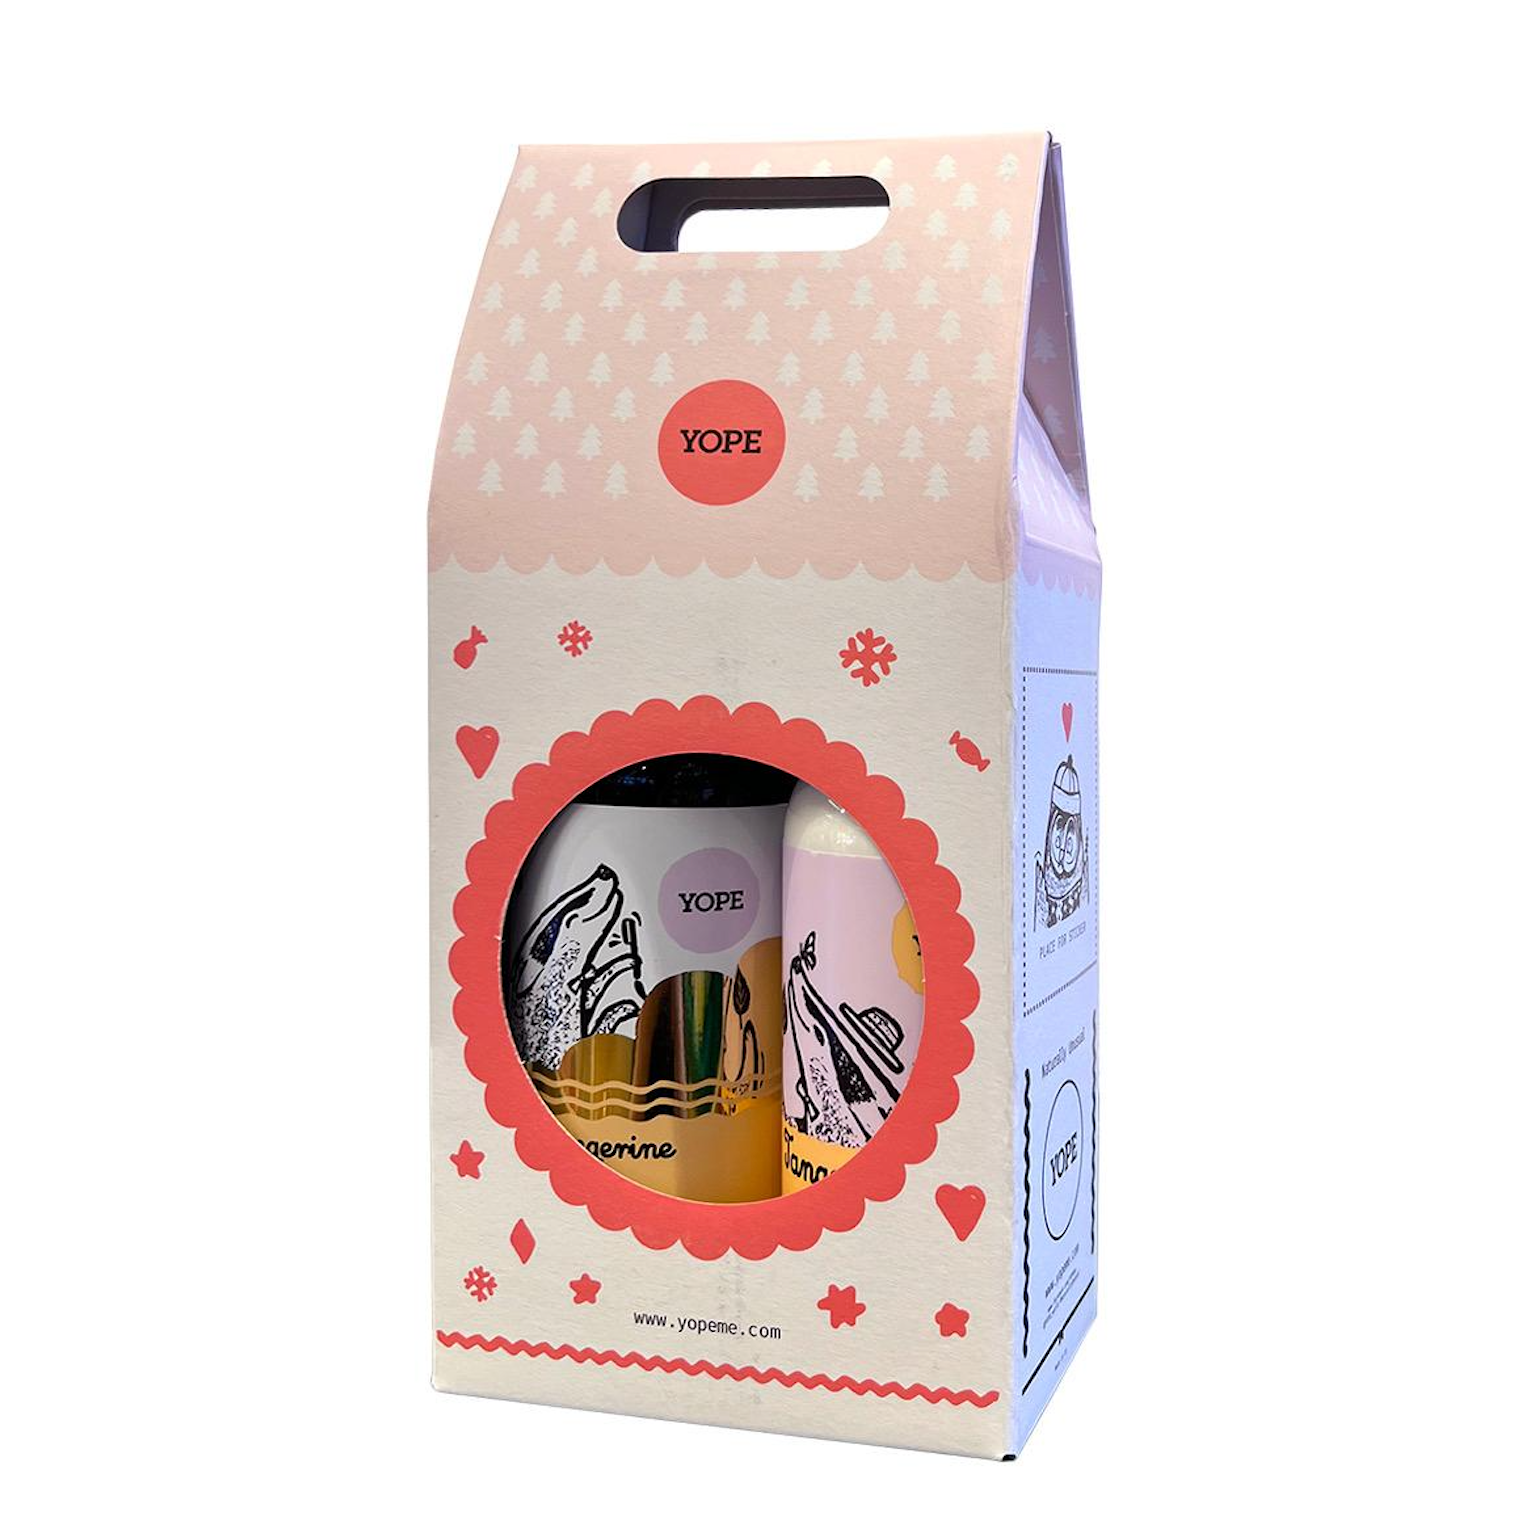 柑橘和覆盆子沐浴露配手部和身體乳液孖裝套裝禮盒/ Tangerine and Raspberry Shower gel and Body & Hand Lotion Duo Gift Set